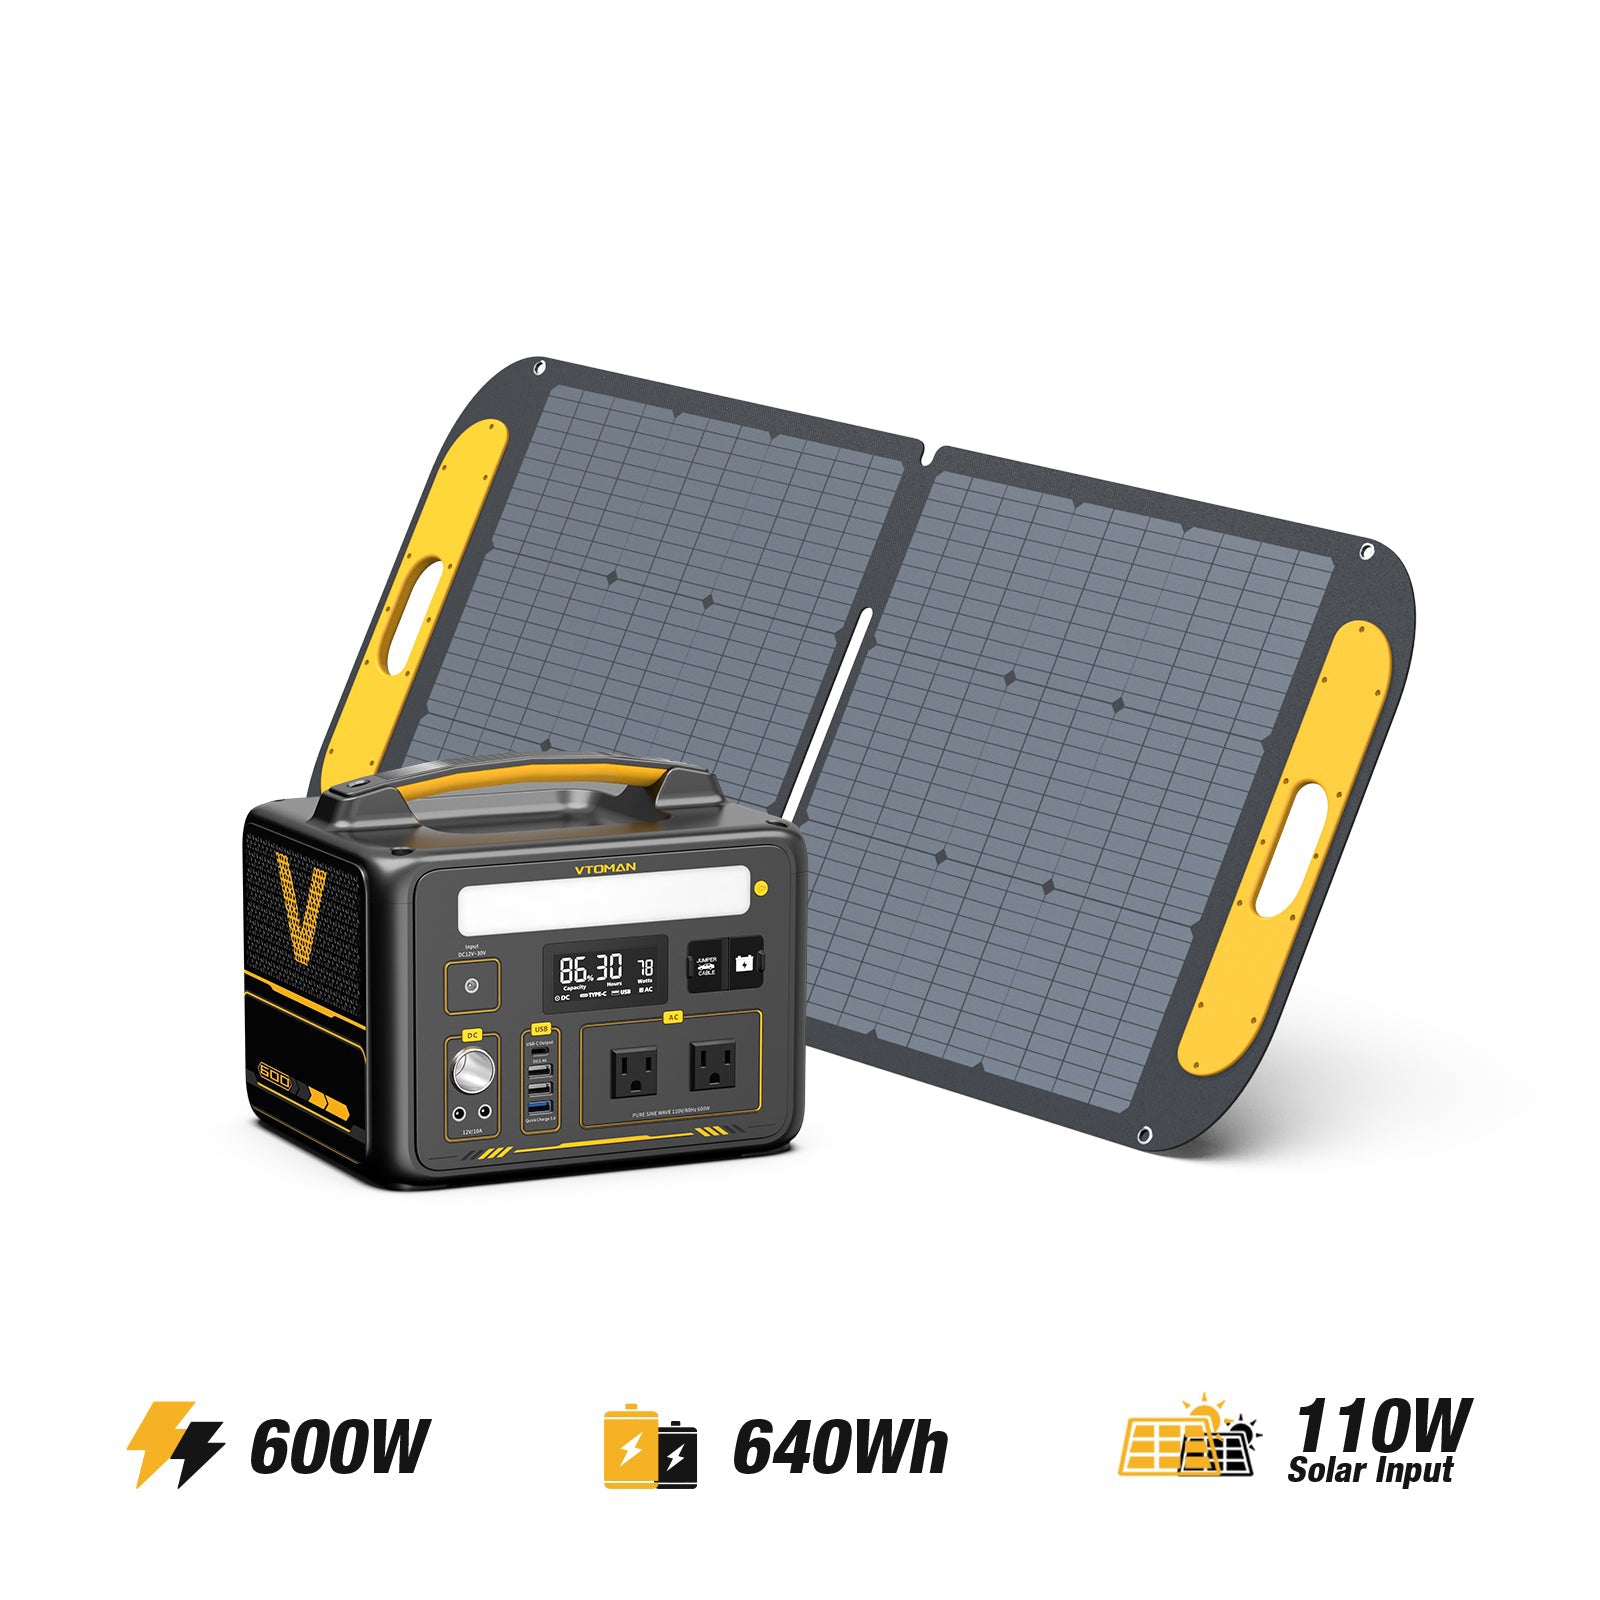 jump 600 power -AC 600W-640wh capacity-110W solar panel